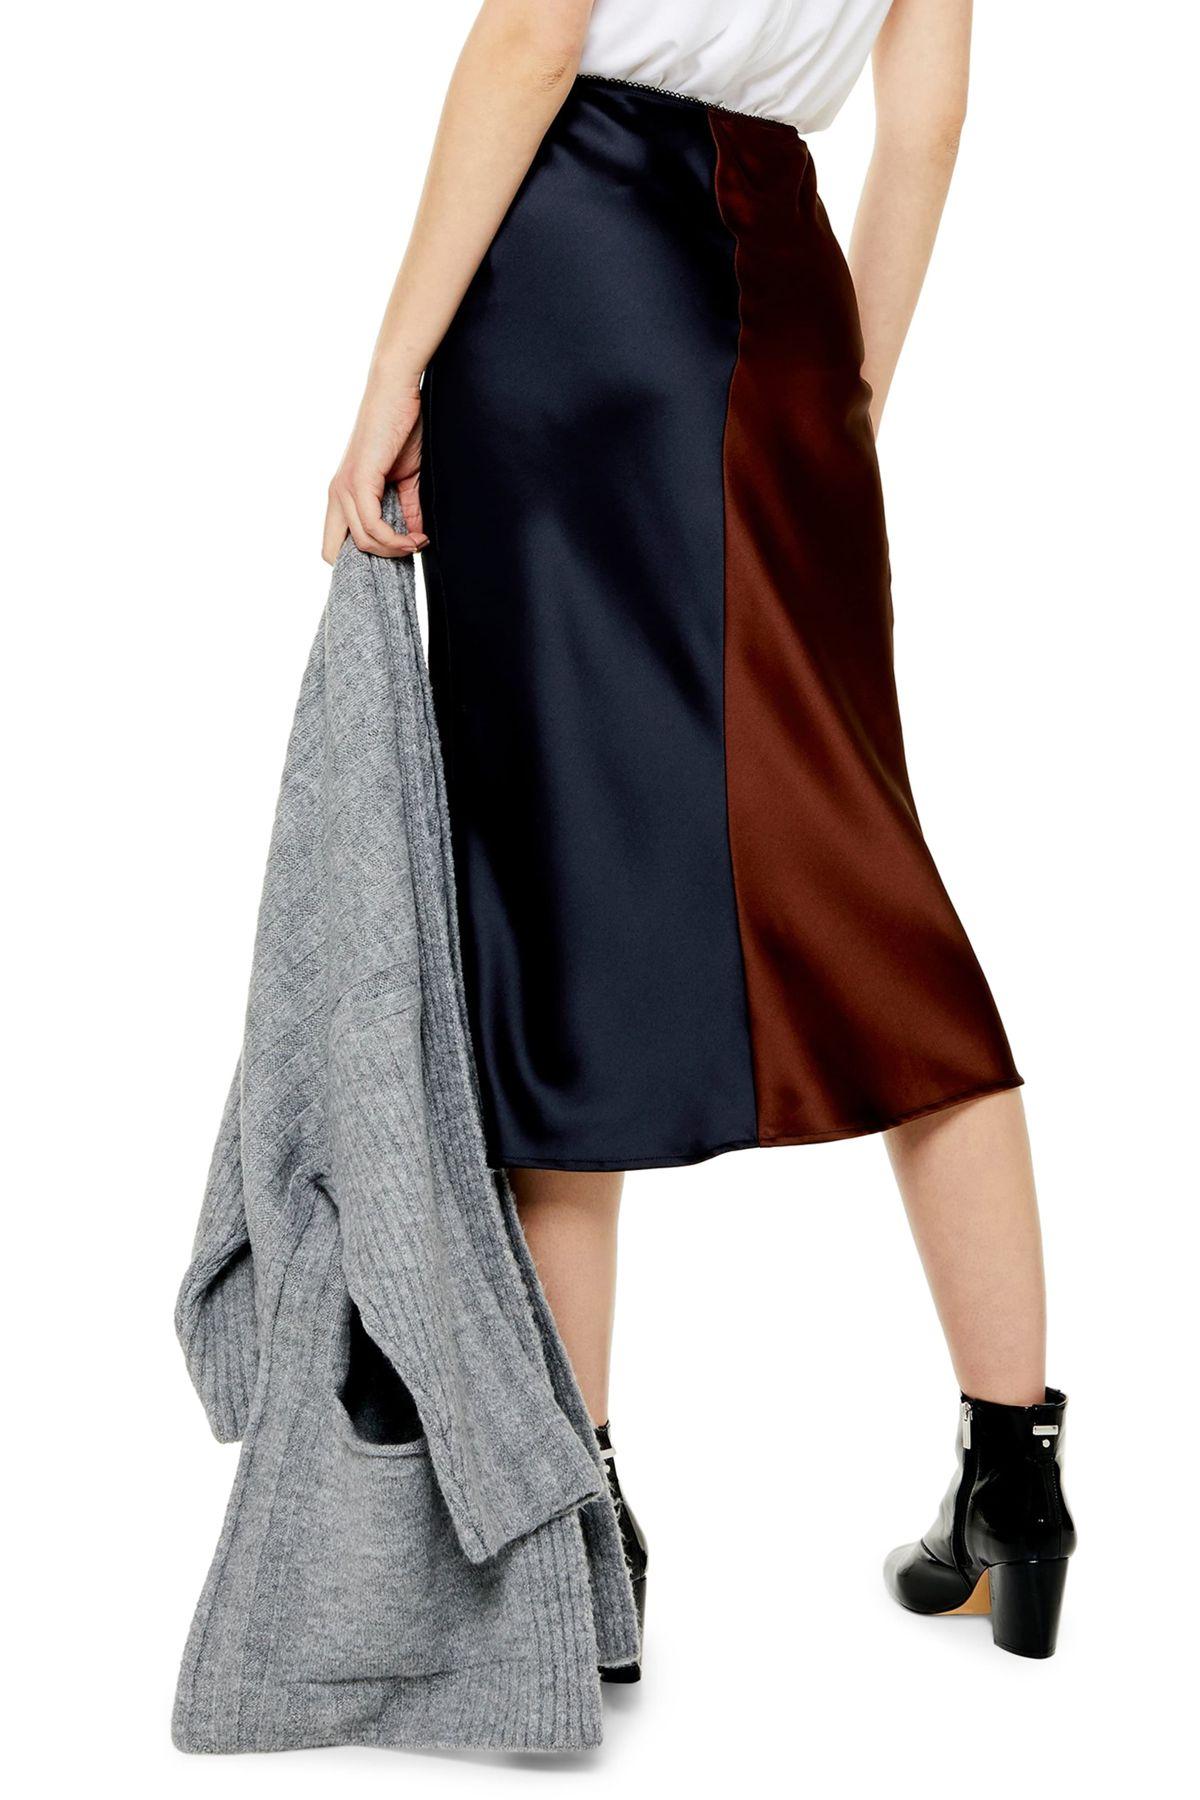 TOPSHOP Colorblock Satin Midi Skirt in Blue - Lyst